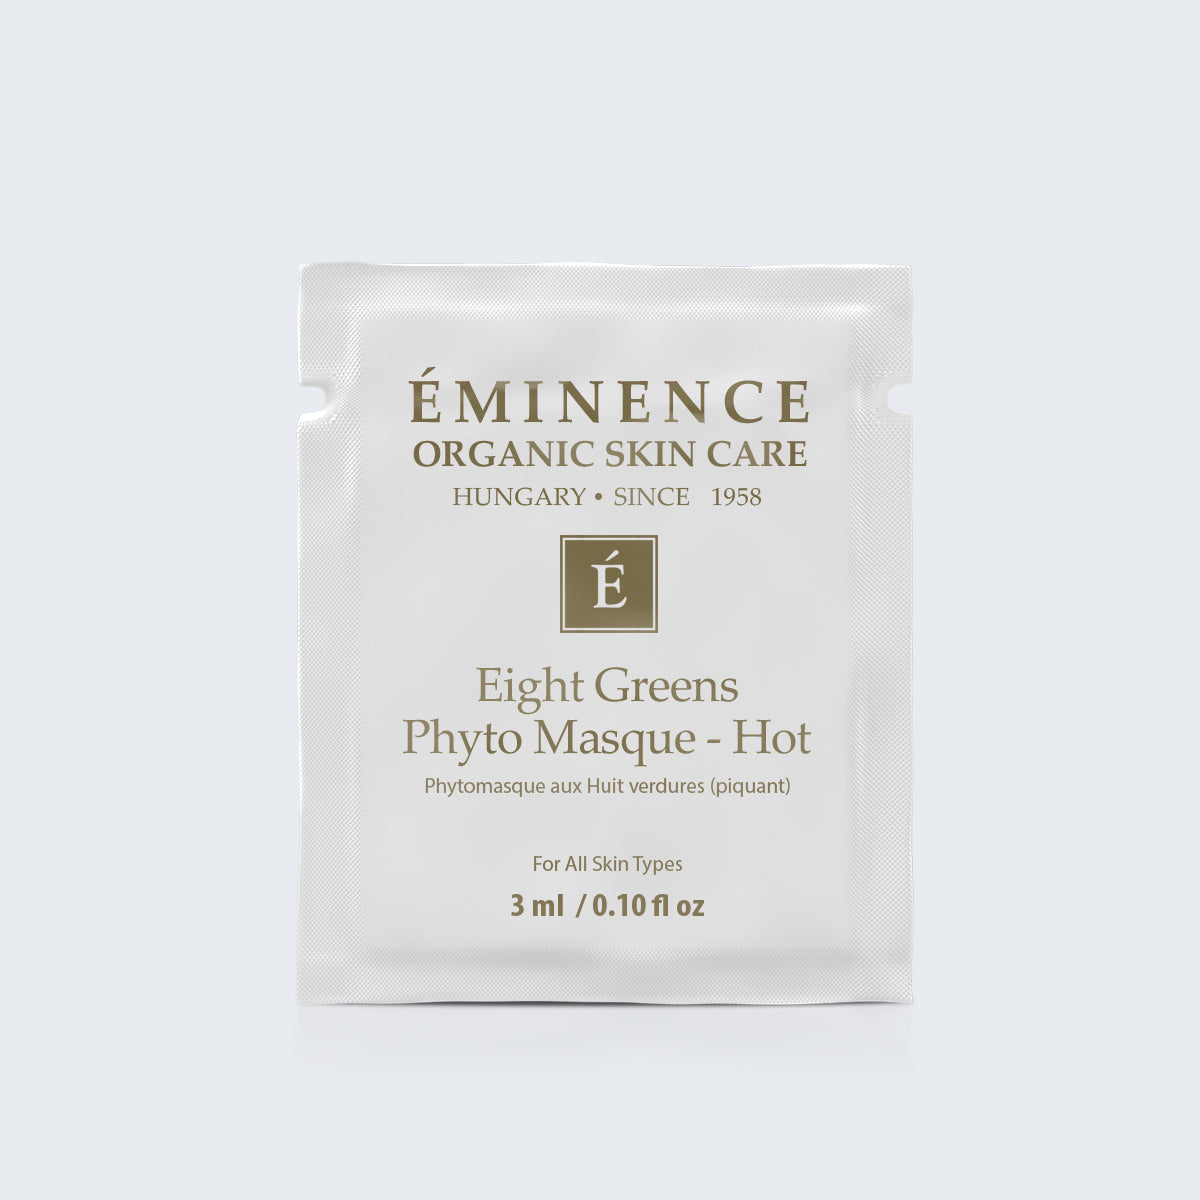 Eminence Organics Eight Greens Phyto Masque - Hot Card Sample